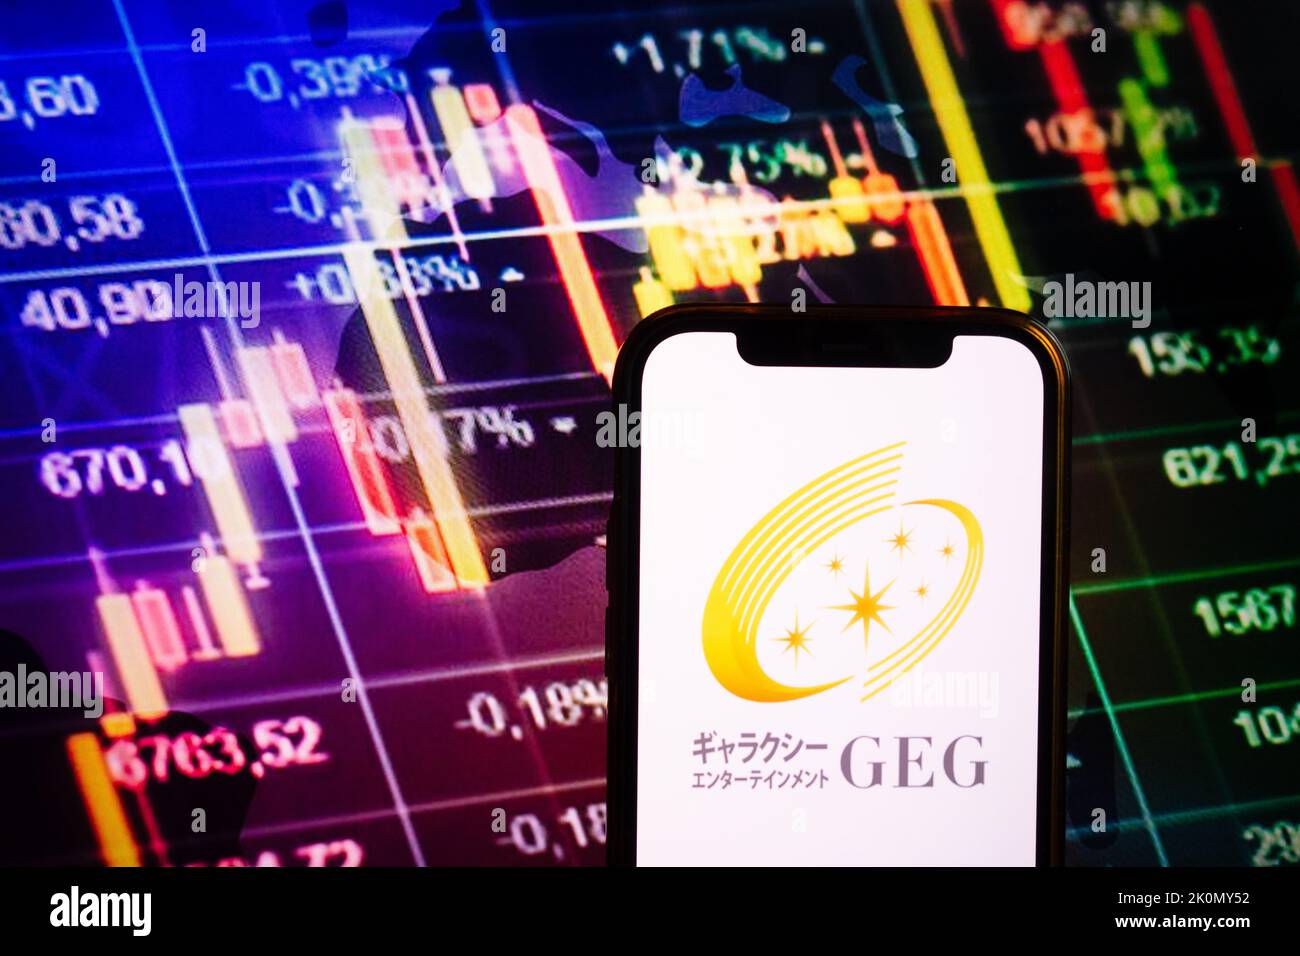 KONSKIE, POLAND - September 10, 2022: Smartphone displaying logo of Galaxy Entertainment company on stock exchange diagram background Stock Photo